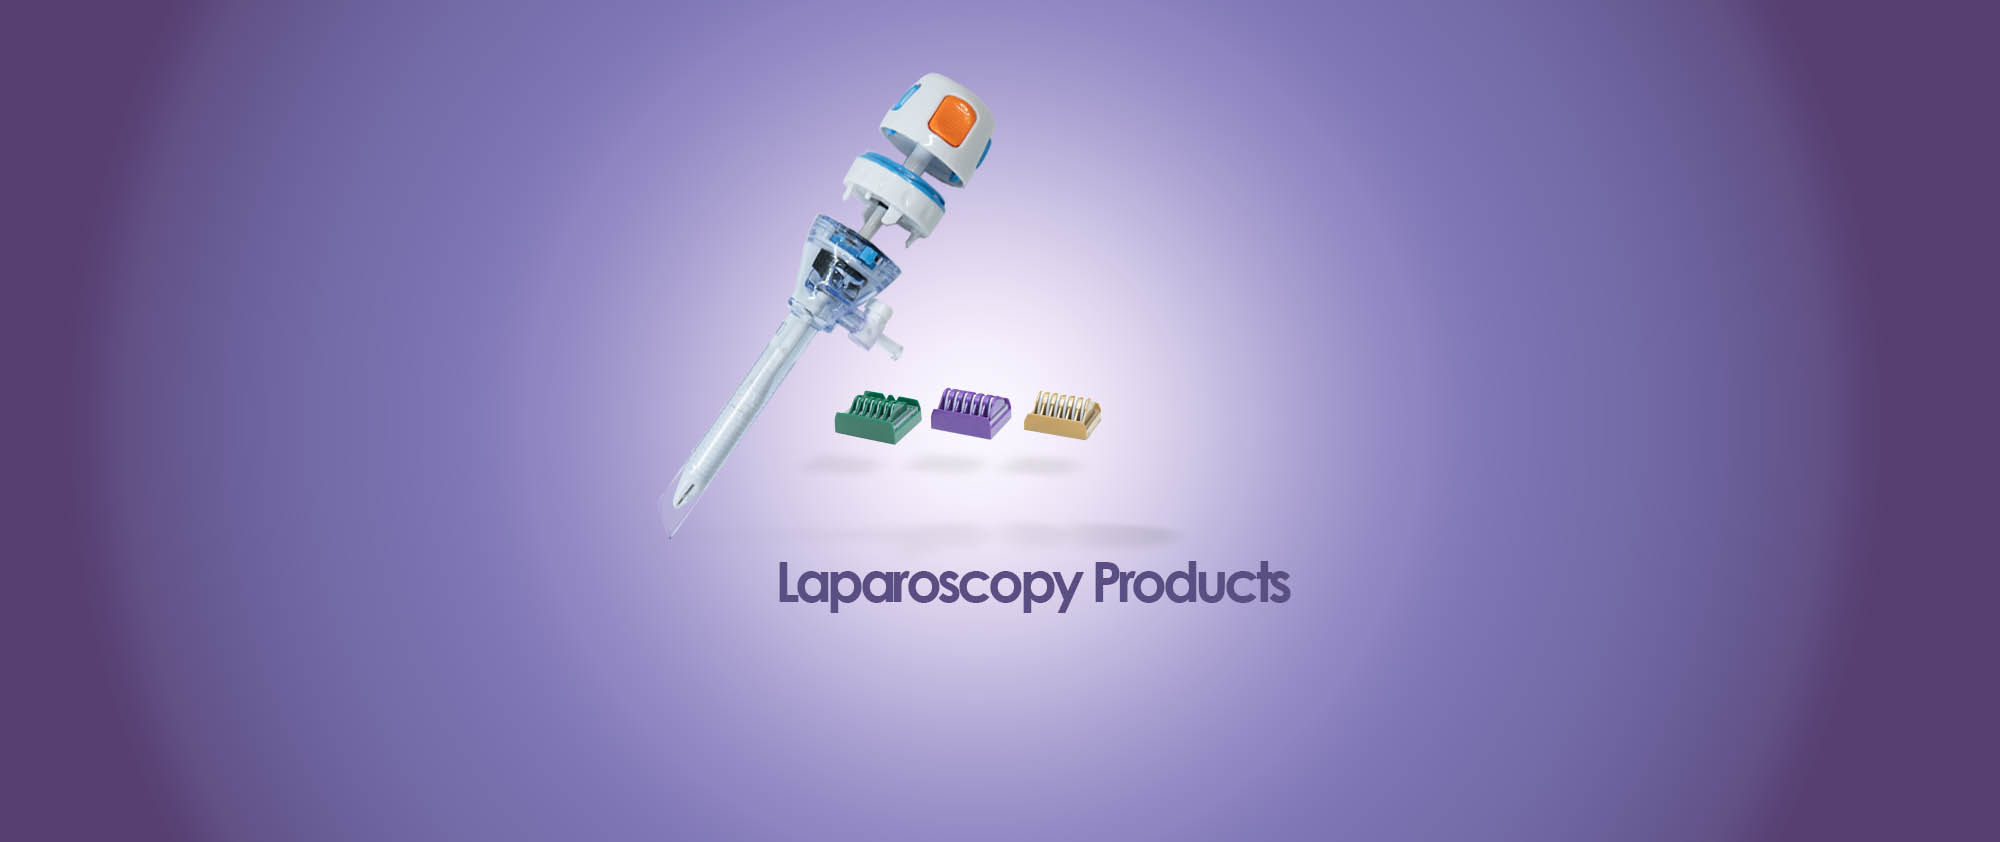 Laparoscopy Products